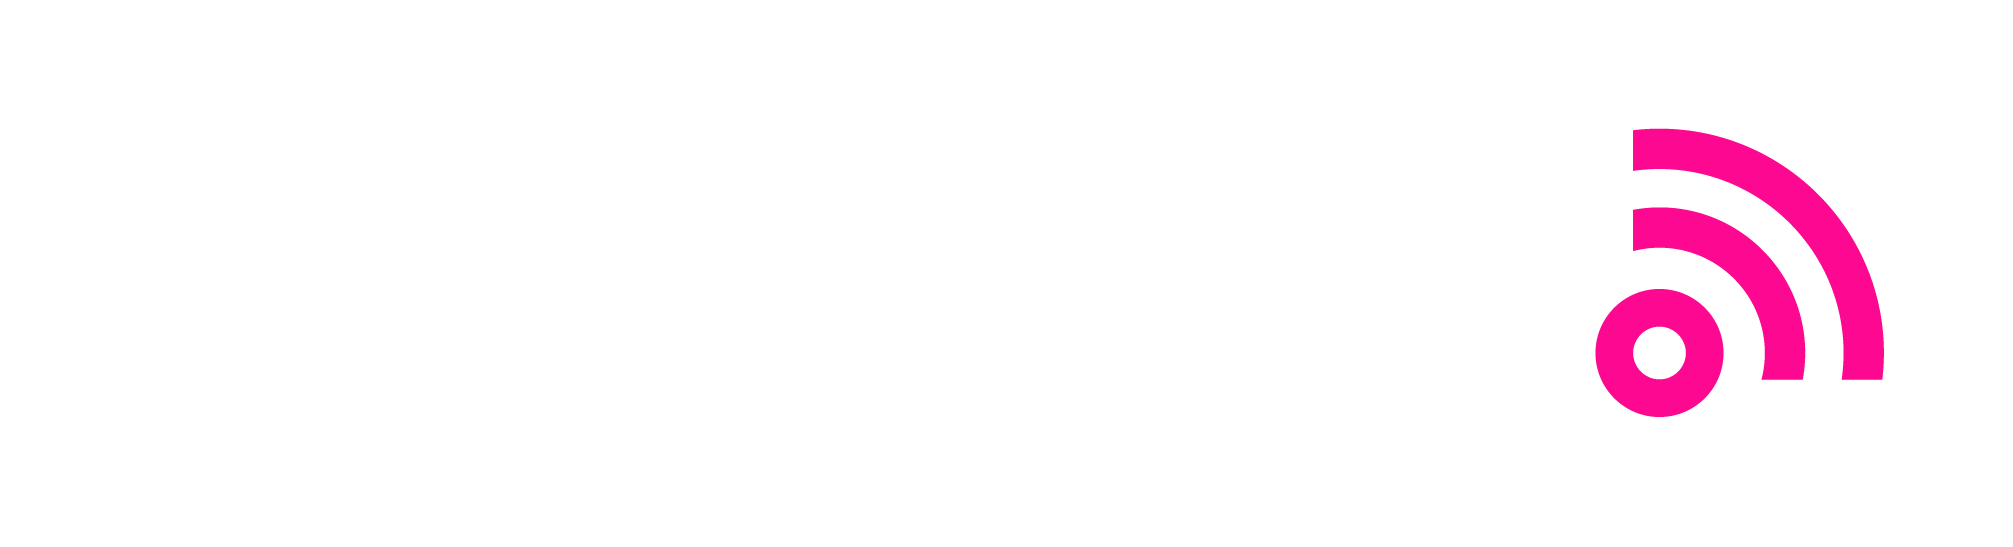 techradar-15-logo-marketo-white.png